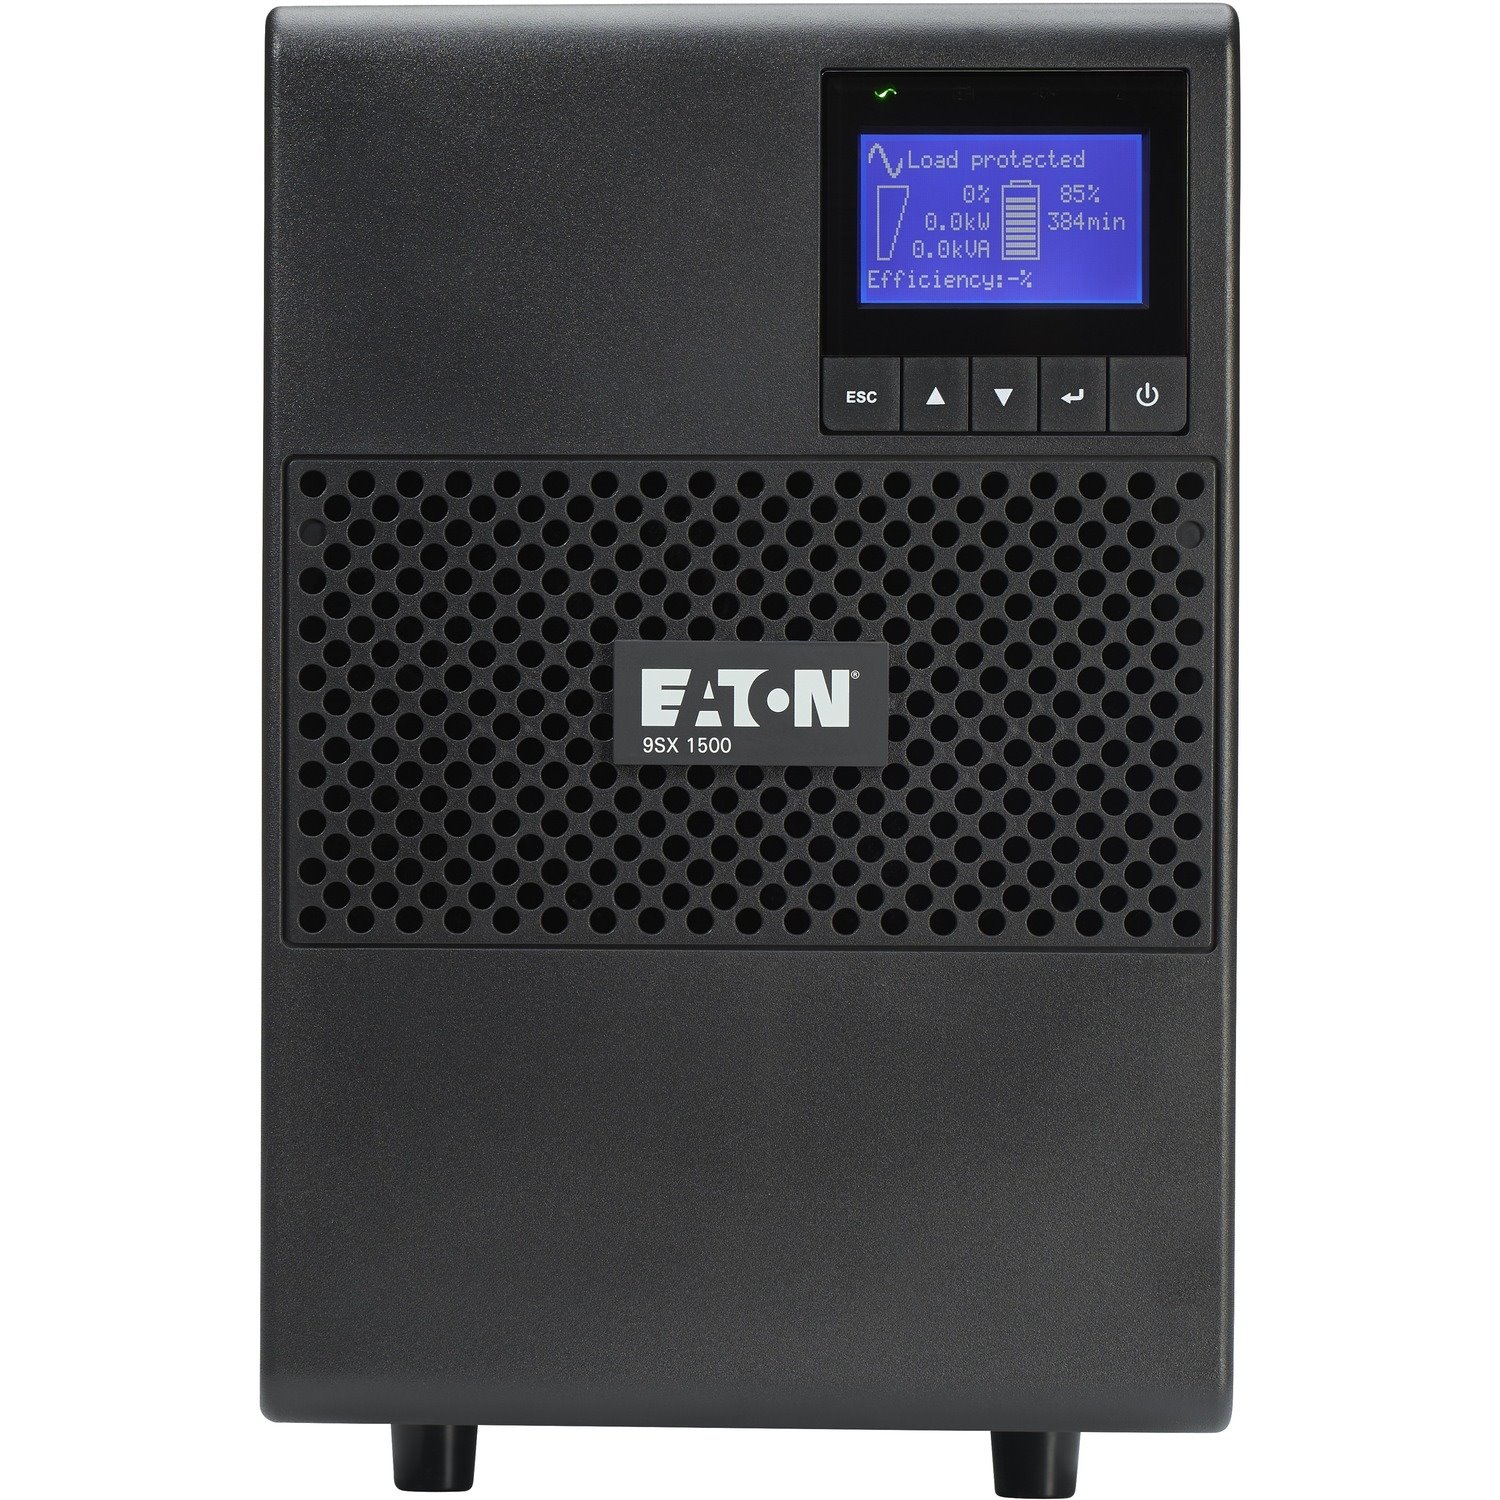 Eaton Double Conversion Online UPS - 1.50 kVA/1.35 kW